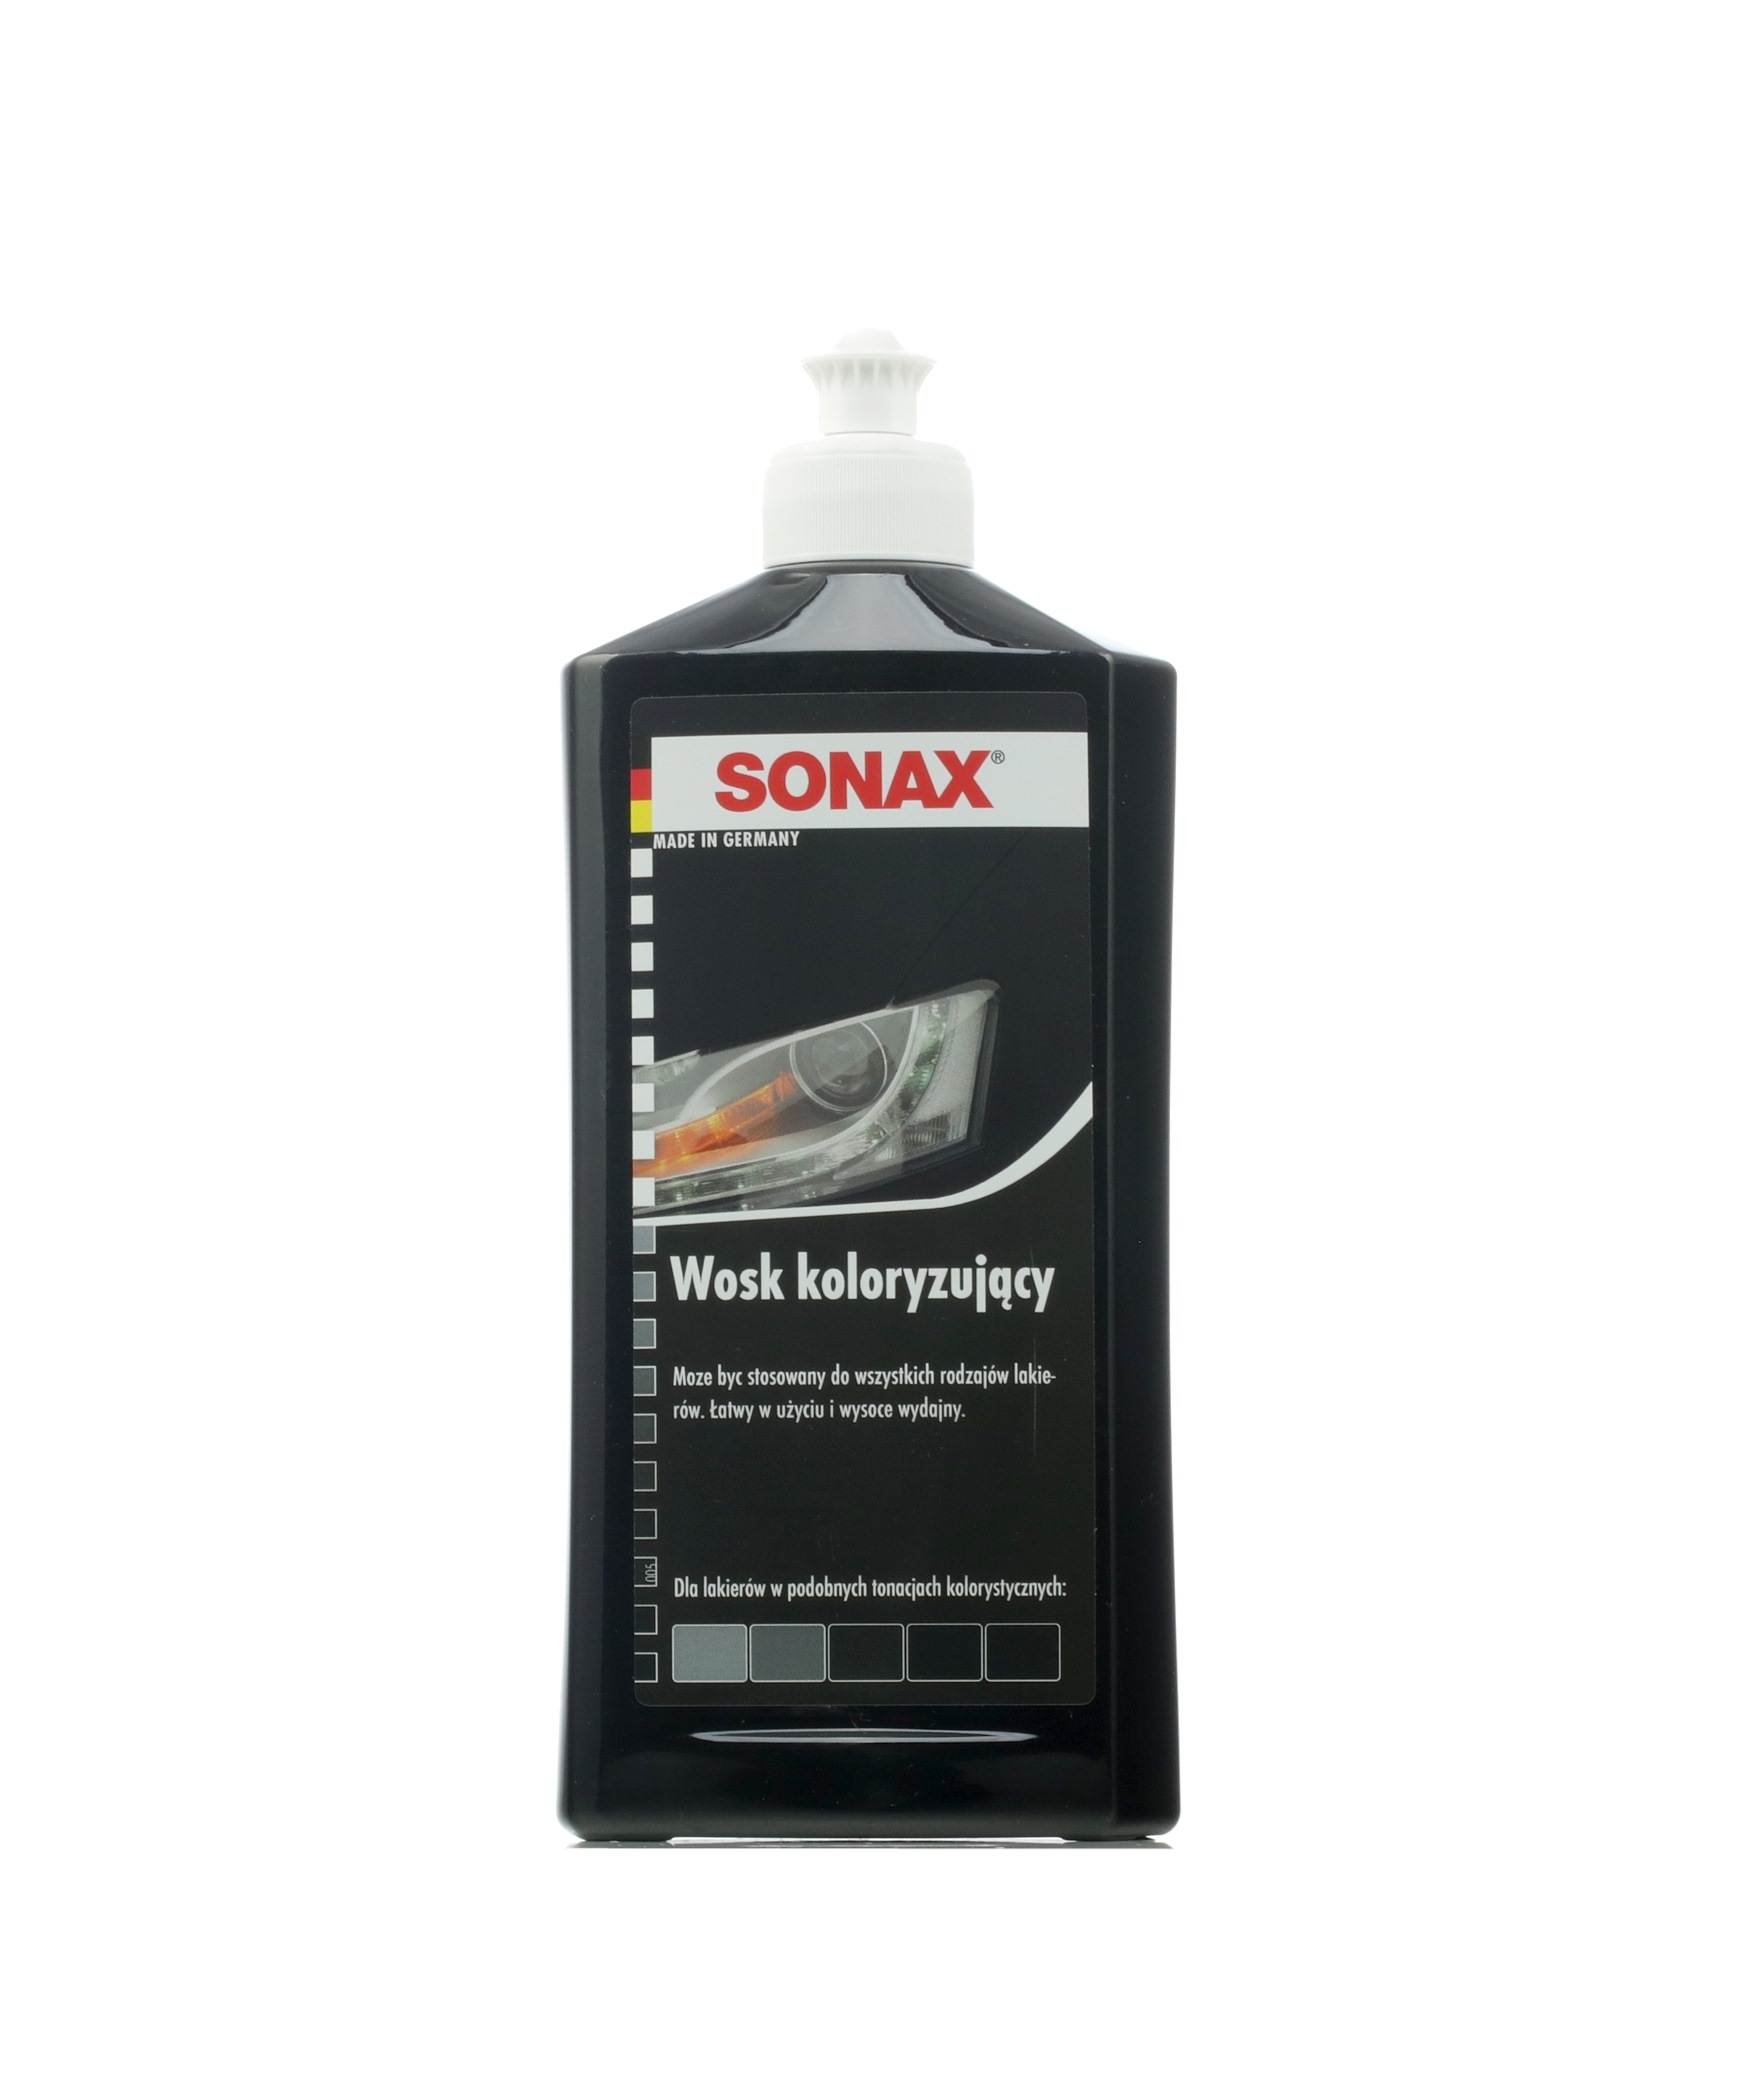 SONAX NanoPro 02961000 Body cavity wax Bottle, Capacity: 500ml